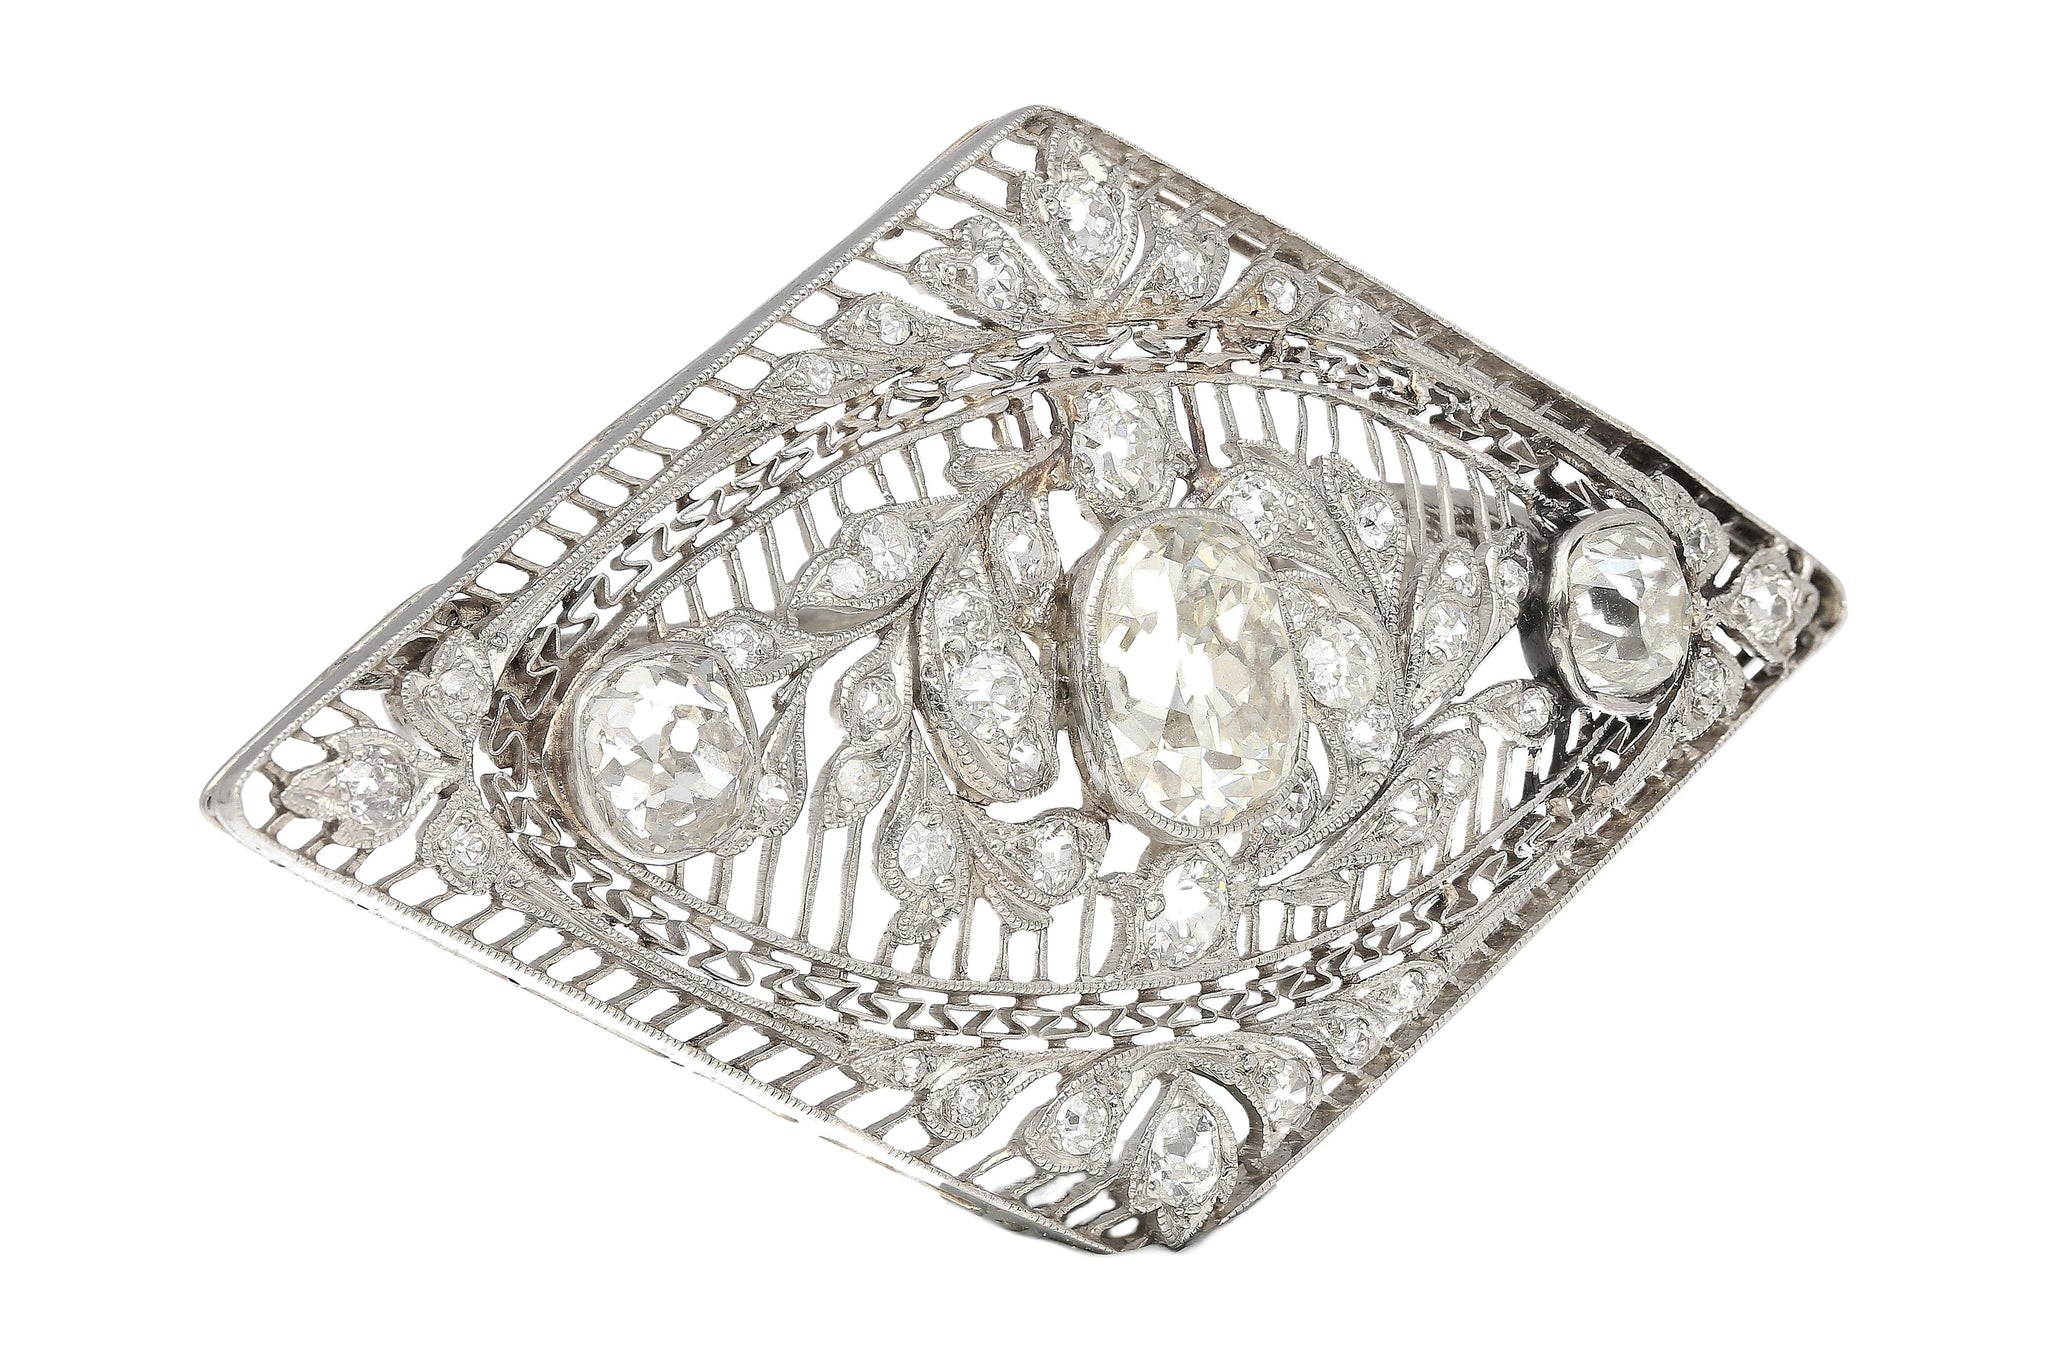 3.5 Carat Old European Cut Art Deco Diamond Brooch in Textured Filigree Platinum